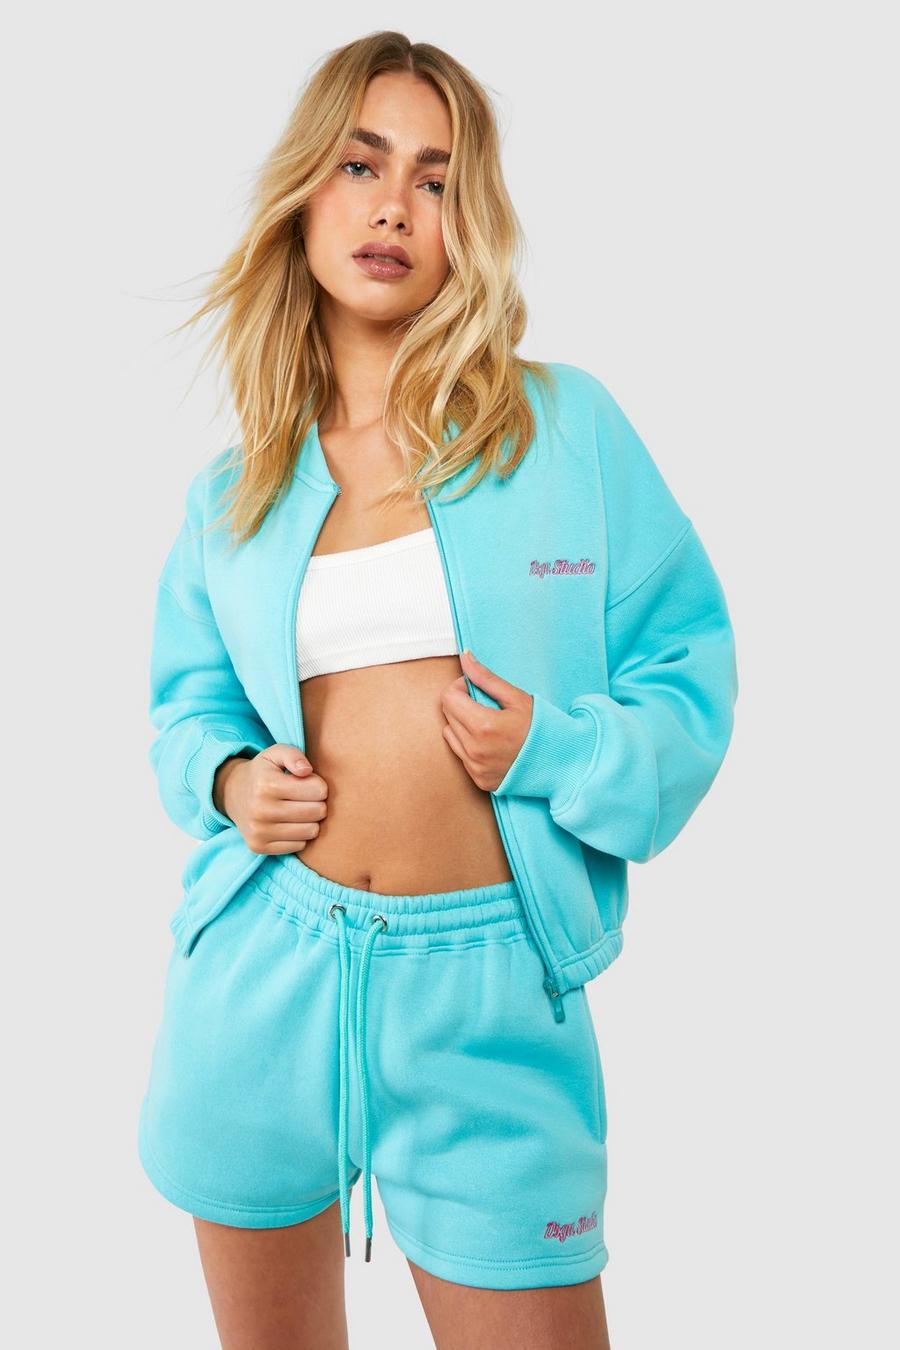 Aqua lightweight and comfortable sweater